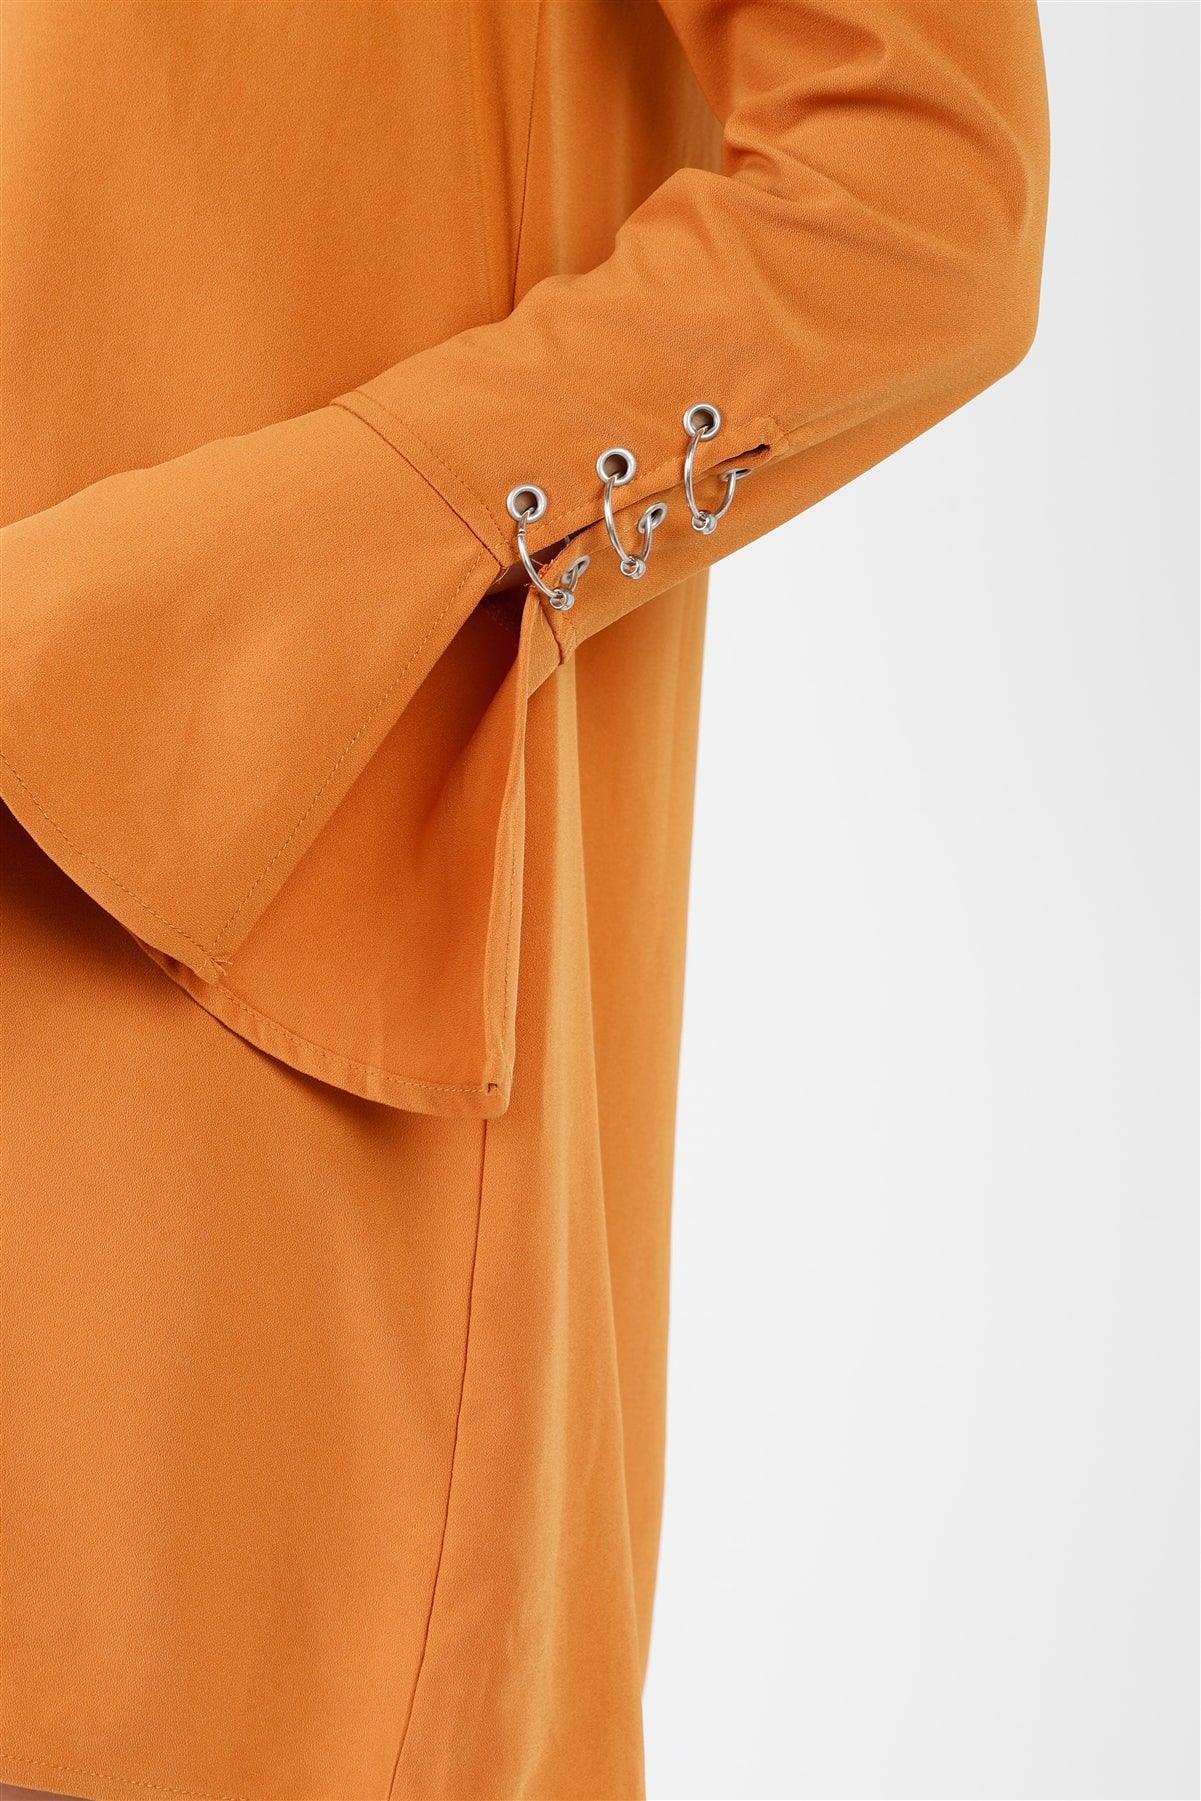 Camel Long Sleeve V-Cut Out Solid Mini Dress /2-2-2